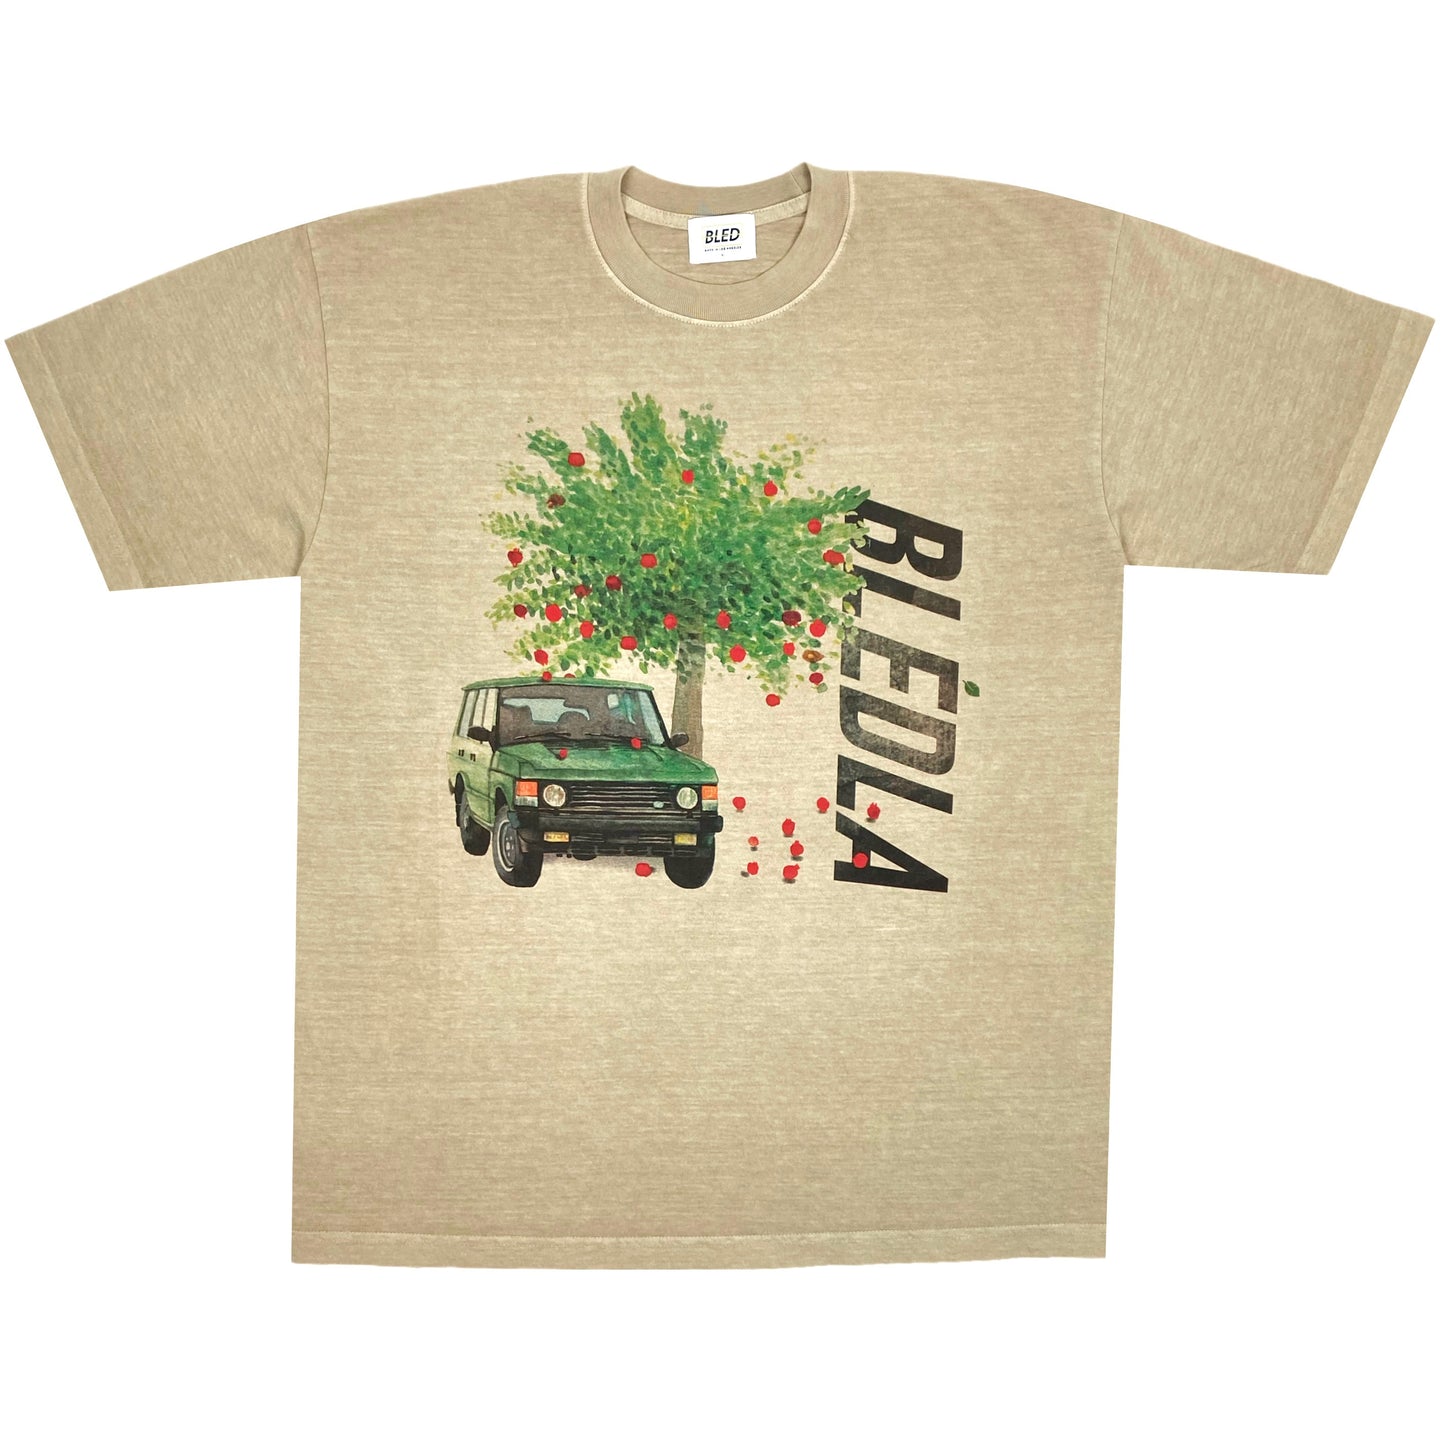 Bled-bledla-watercolor shirt-range rover shirt-pomegranate shirt-vintage tshirt